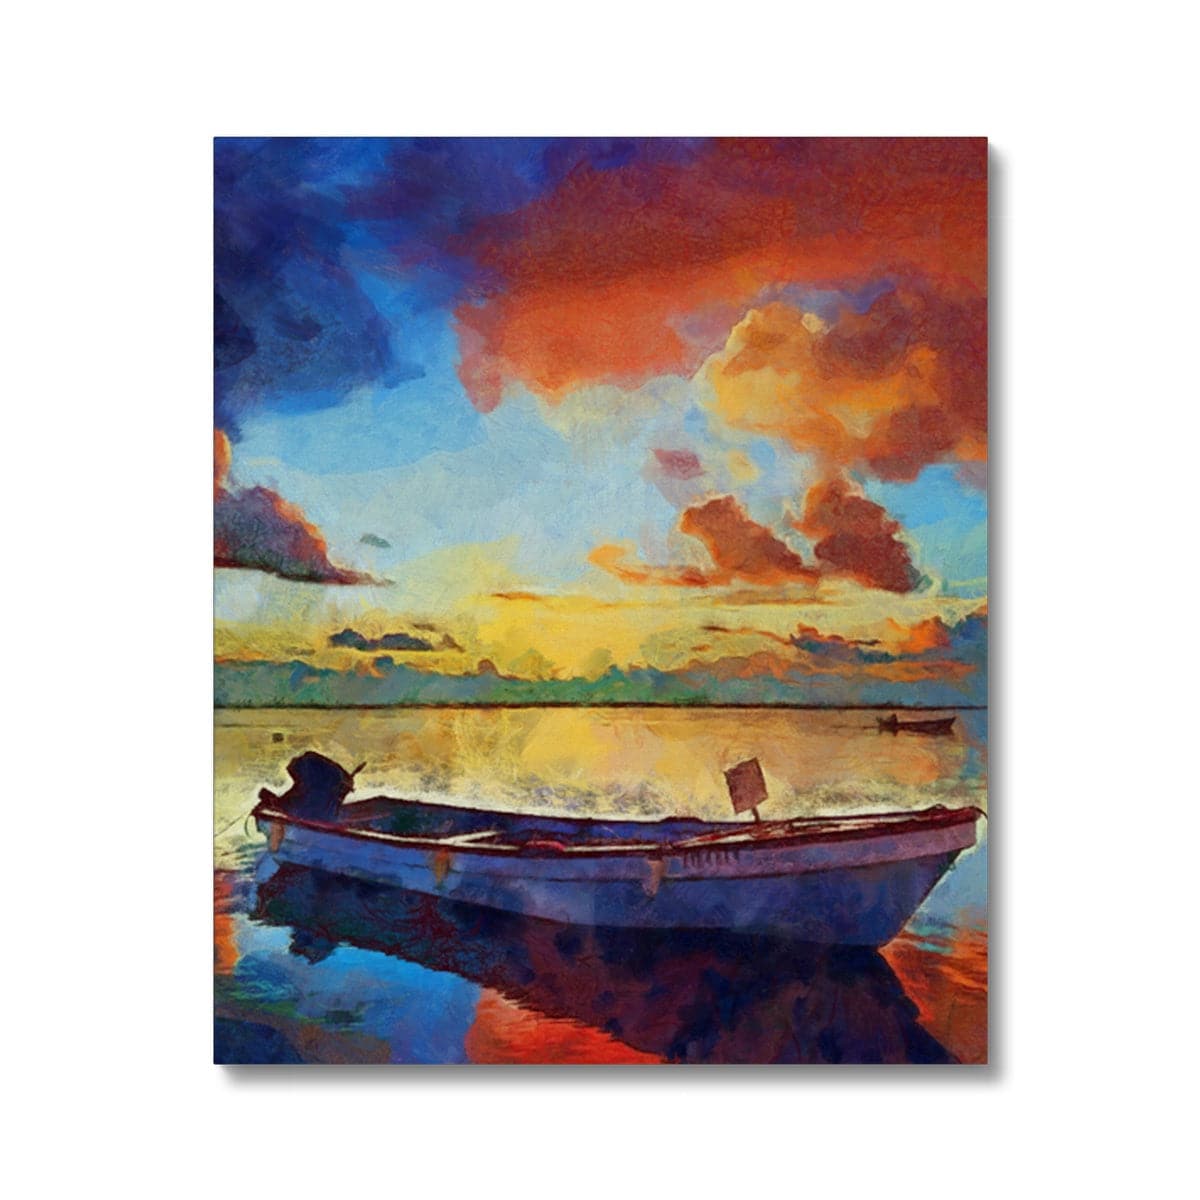 Boat at Orange Dawn in Lake Canvas